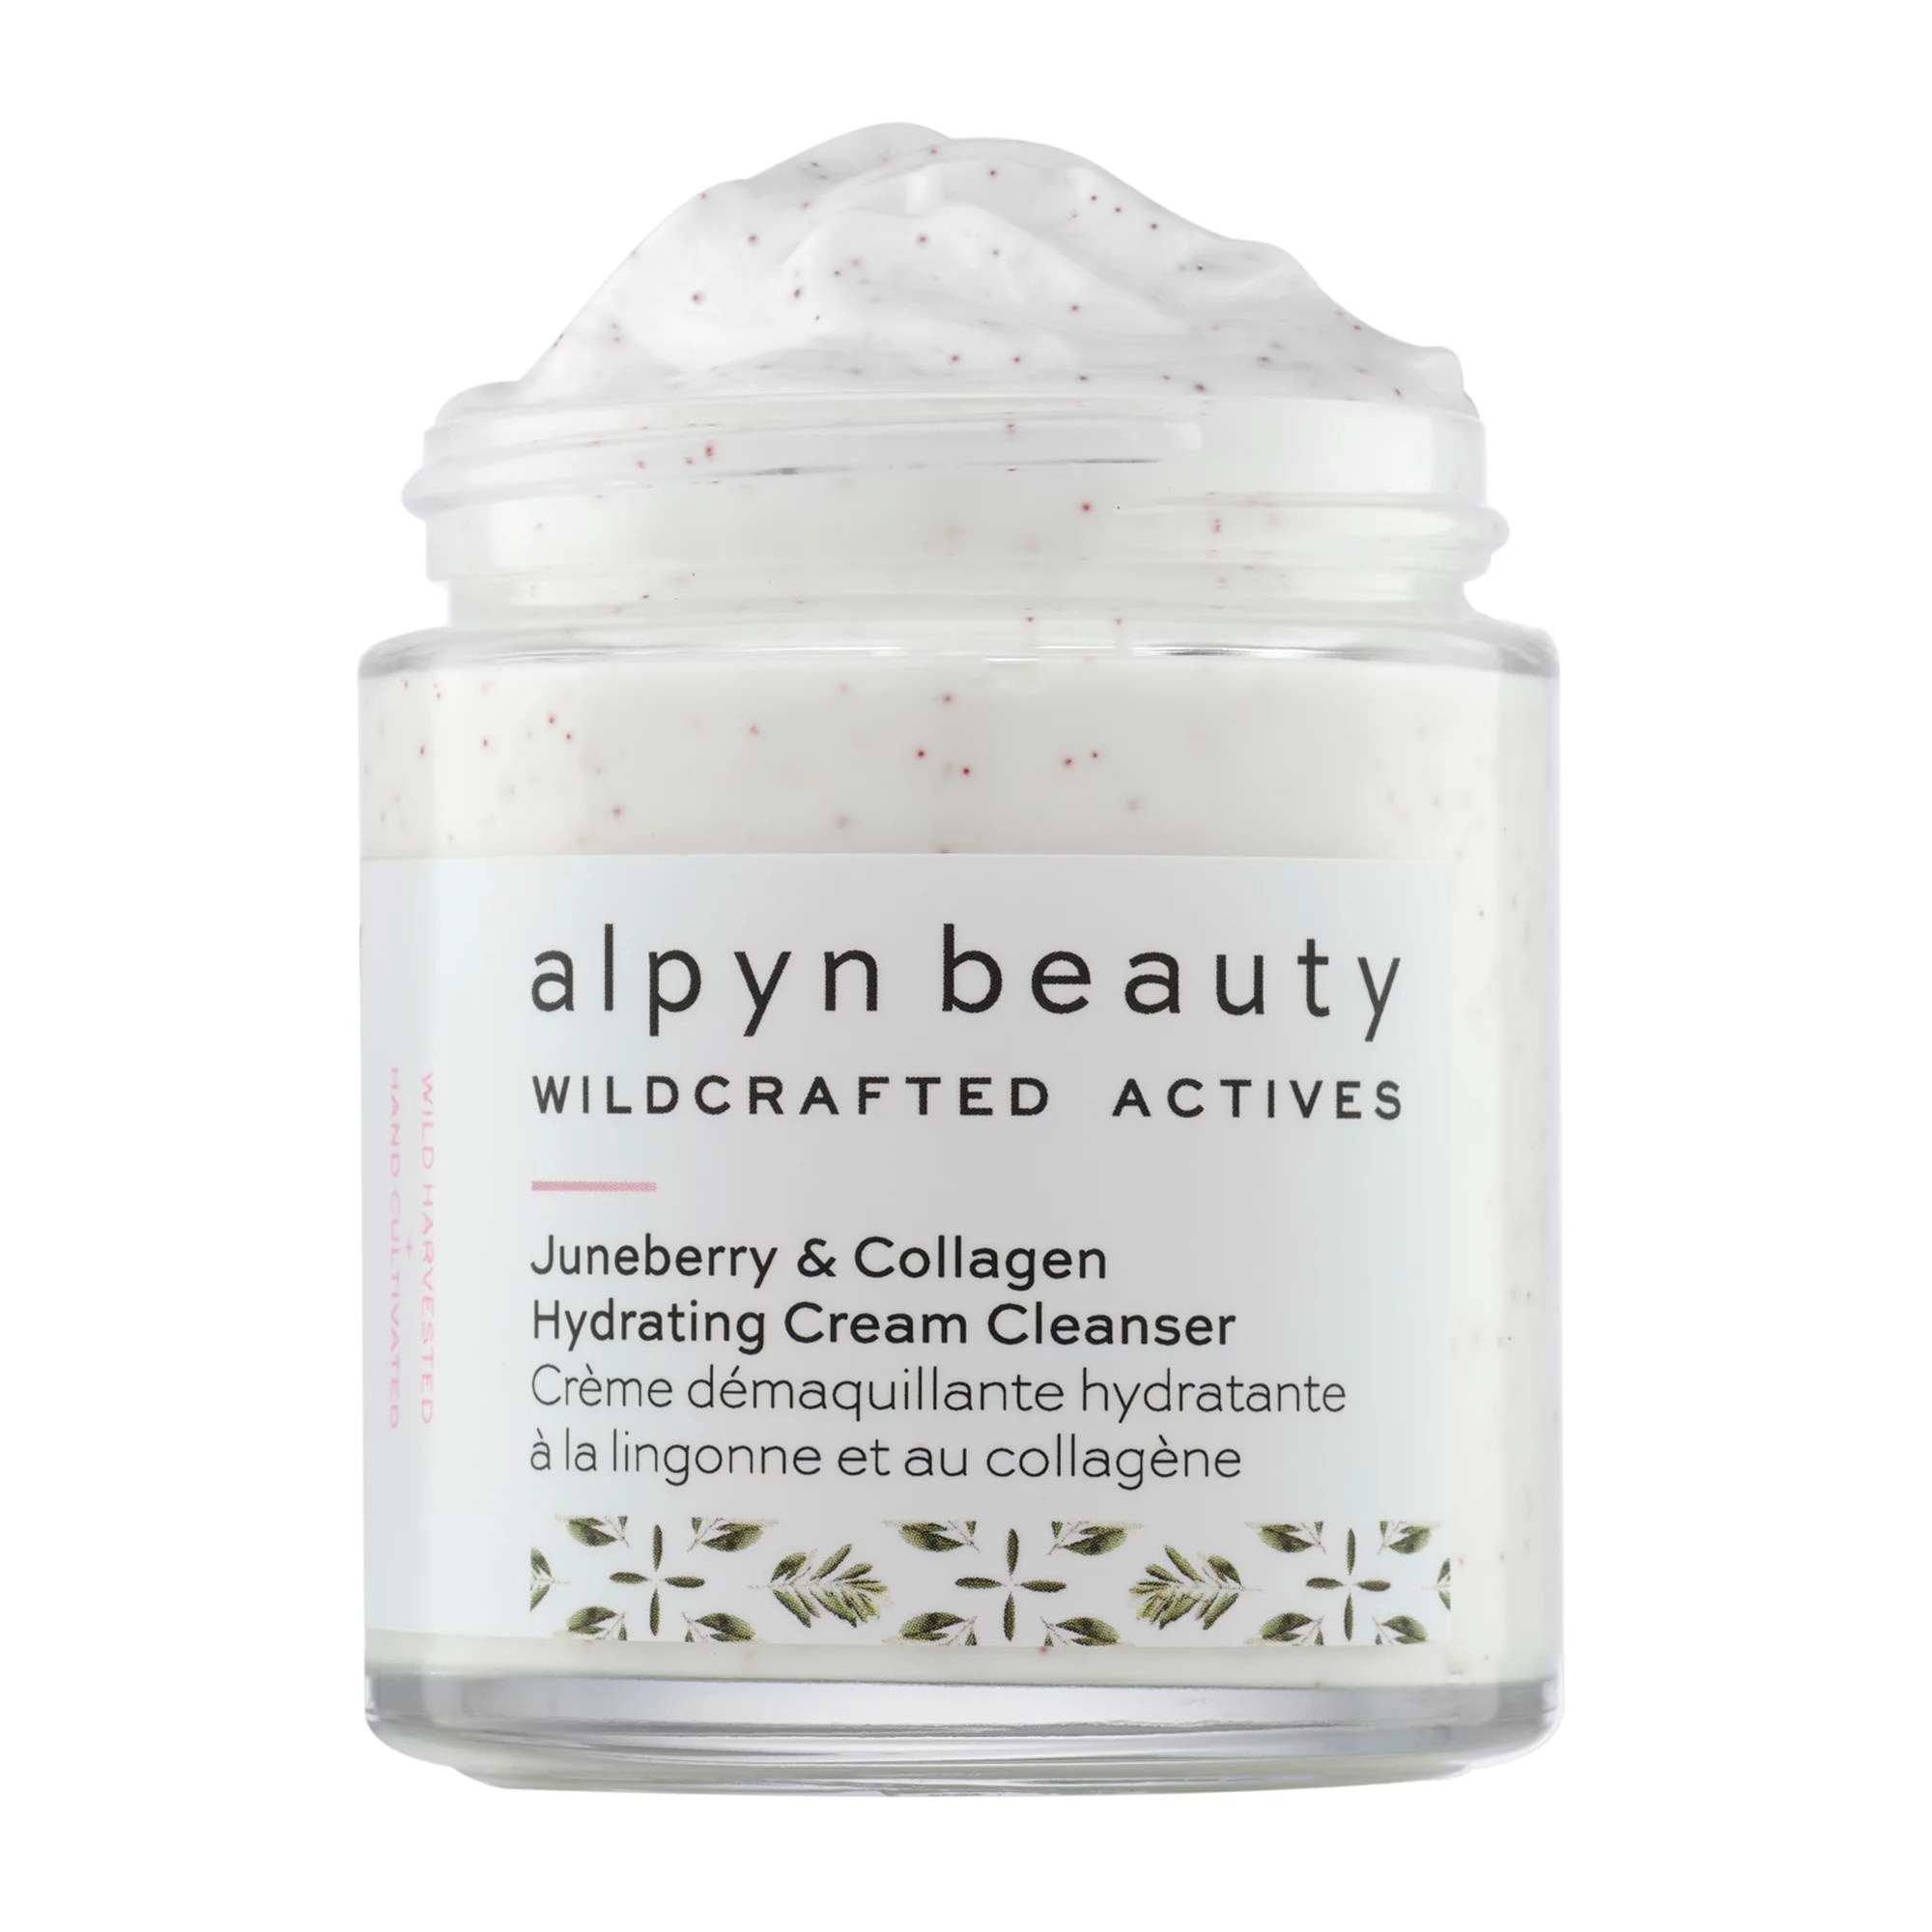 Alpyn Beauty Juneberry & Collagen Cold Cream Cleanser